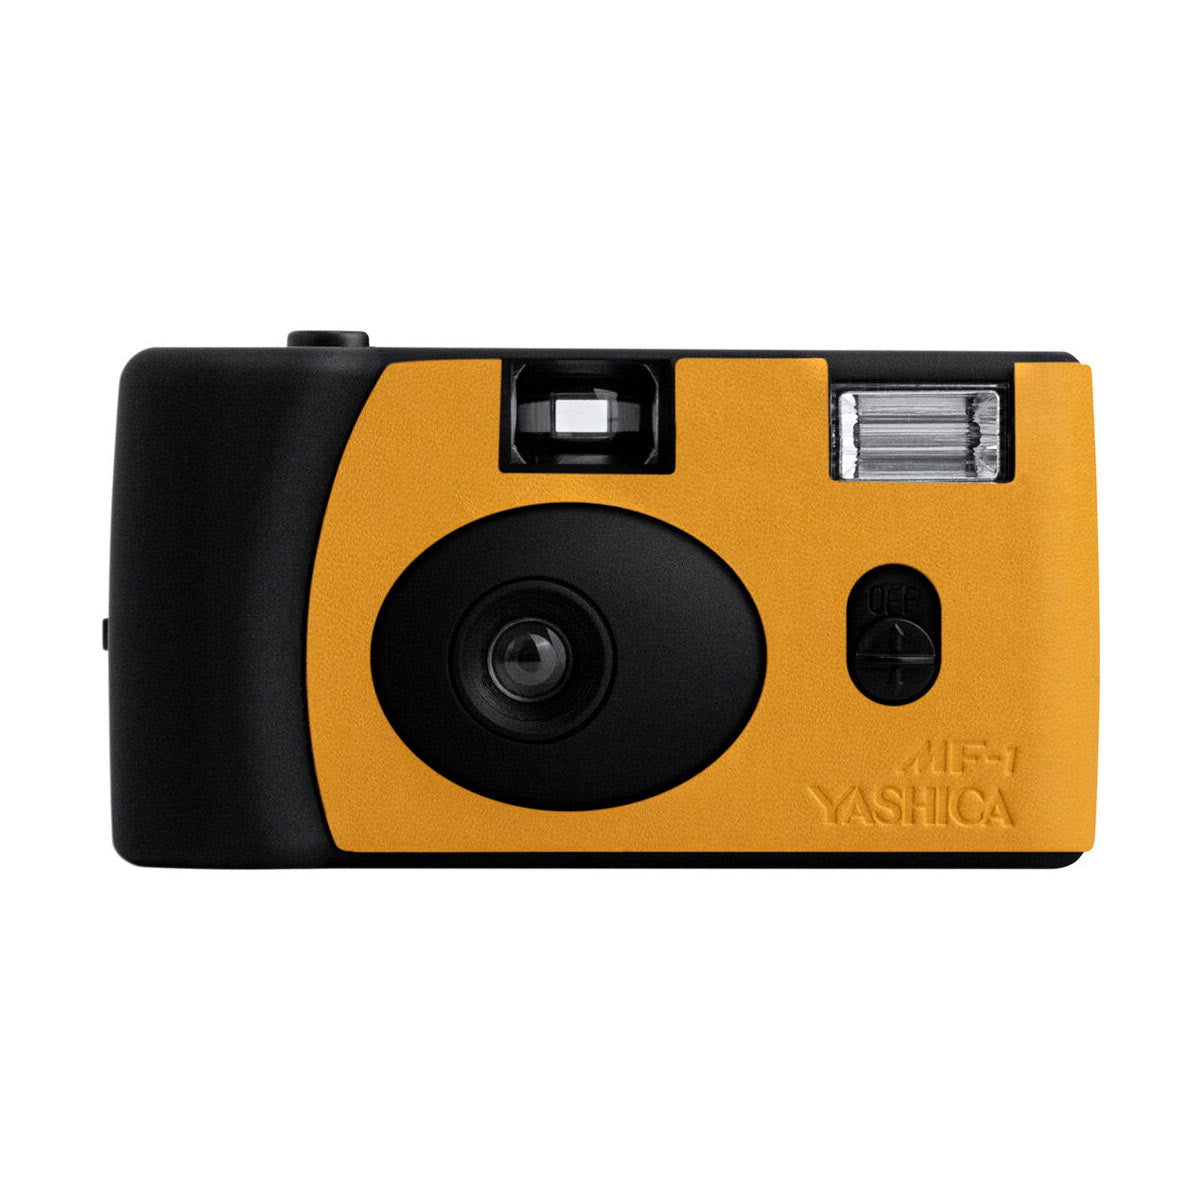 Yashica MF-1 35mm Film Camera (Black & Yellow)